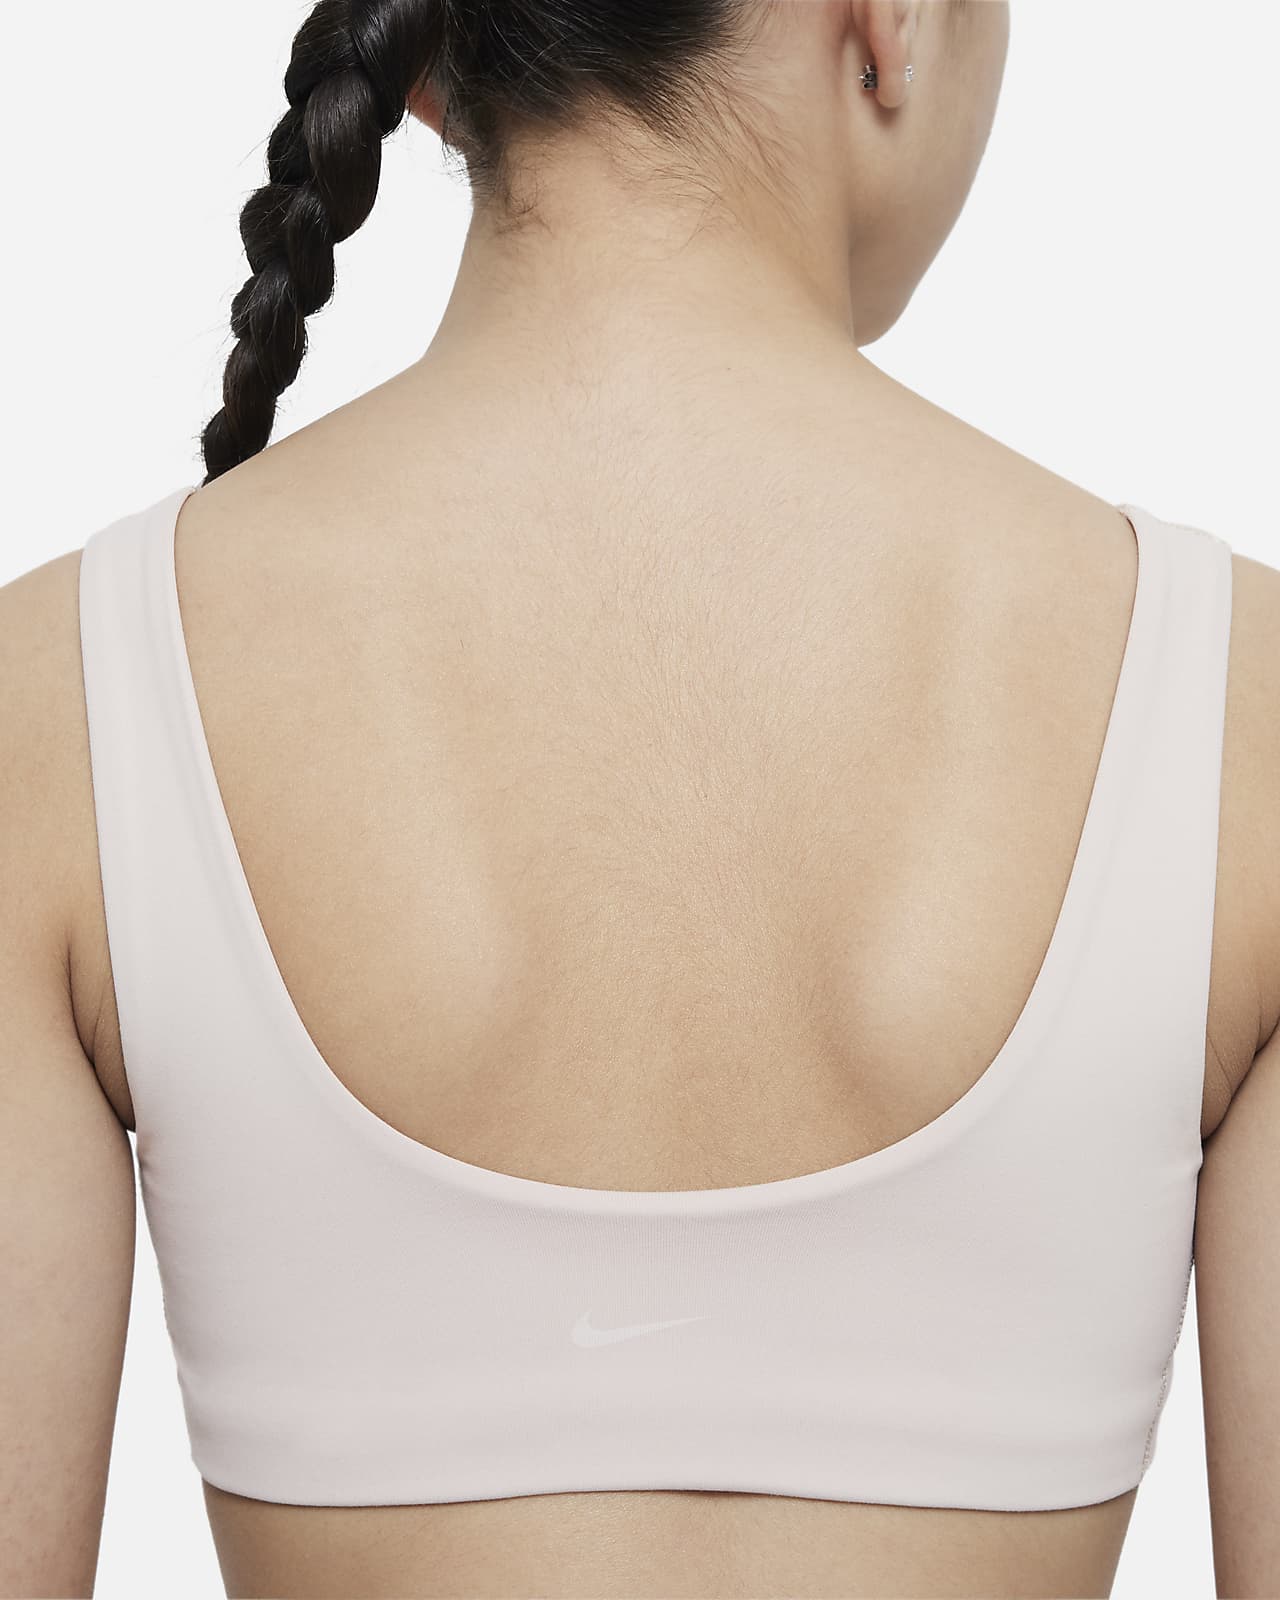 Girls' Sports Bras. Nike CH